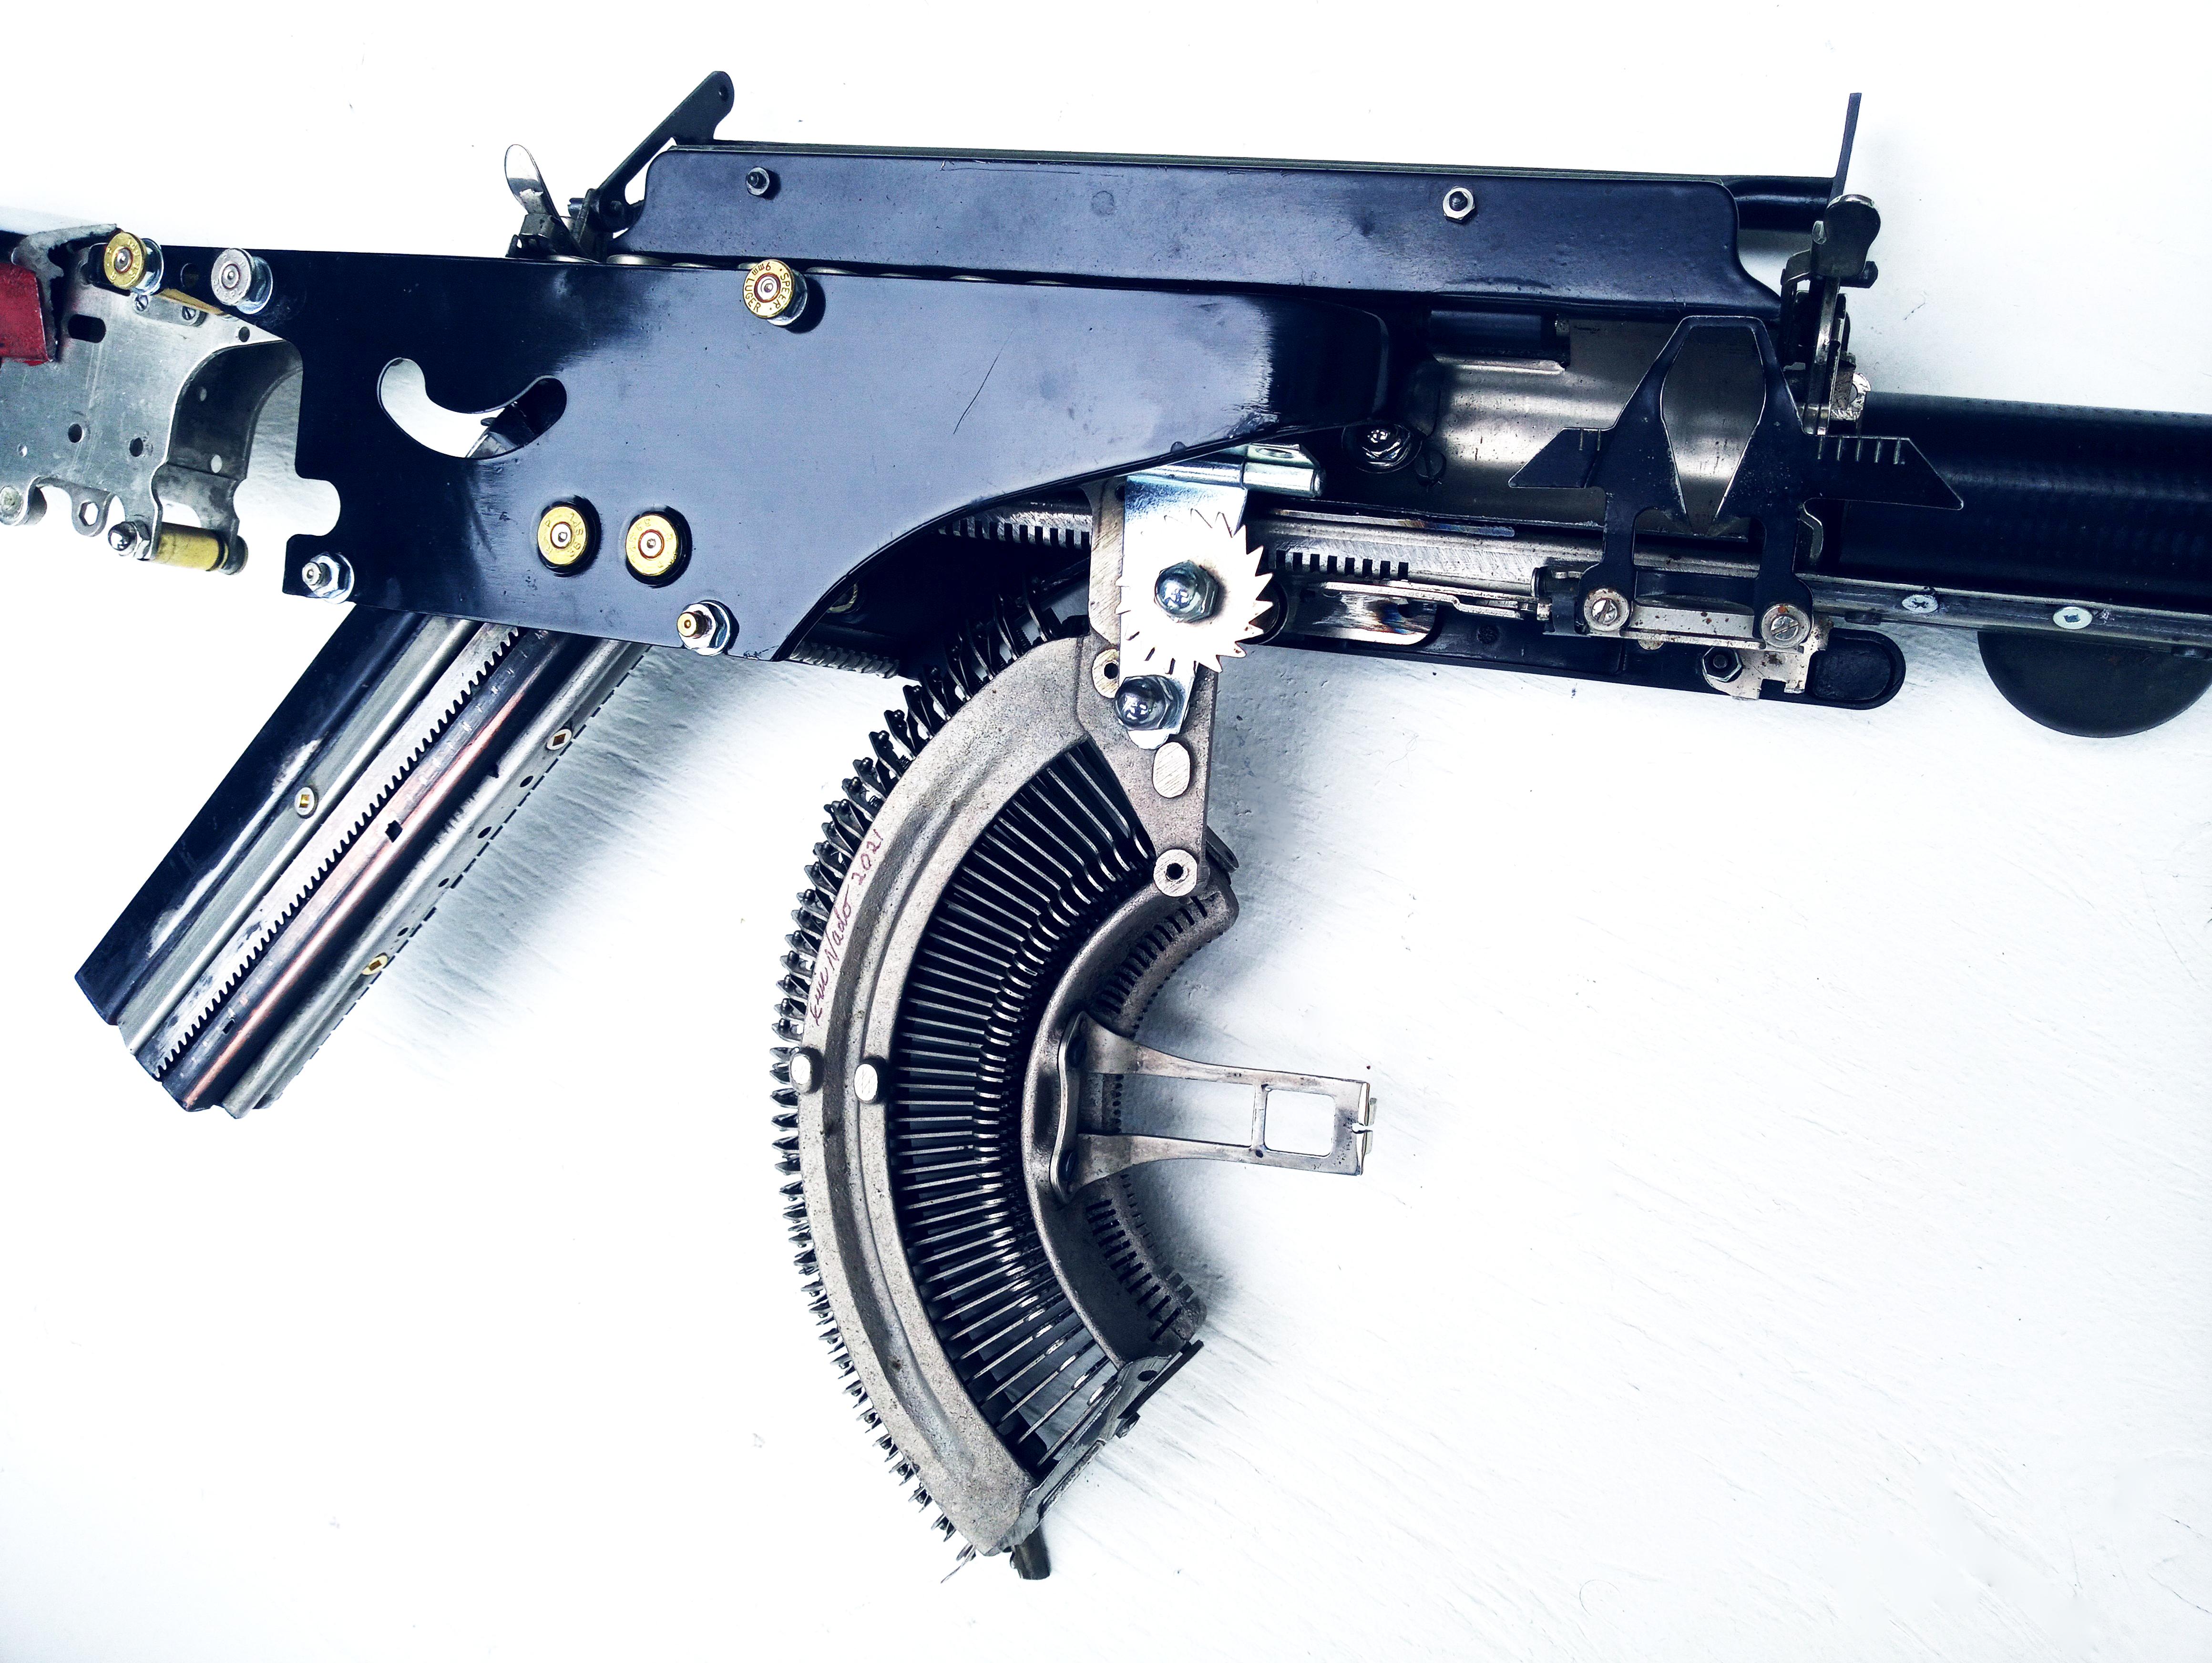 Remington-Trilogy I - black, Vintage Typewriter Machine Gun, wall sculpture  - Sculpture by Éric Nado